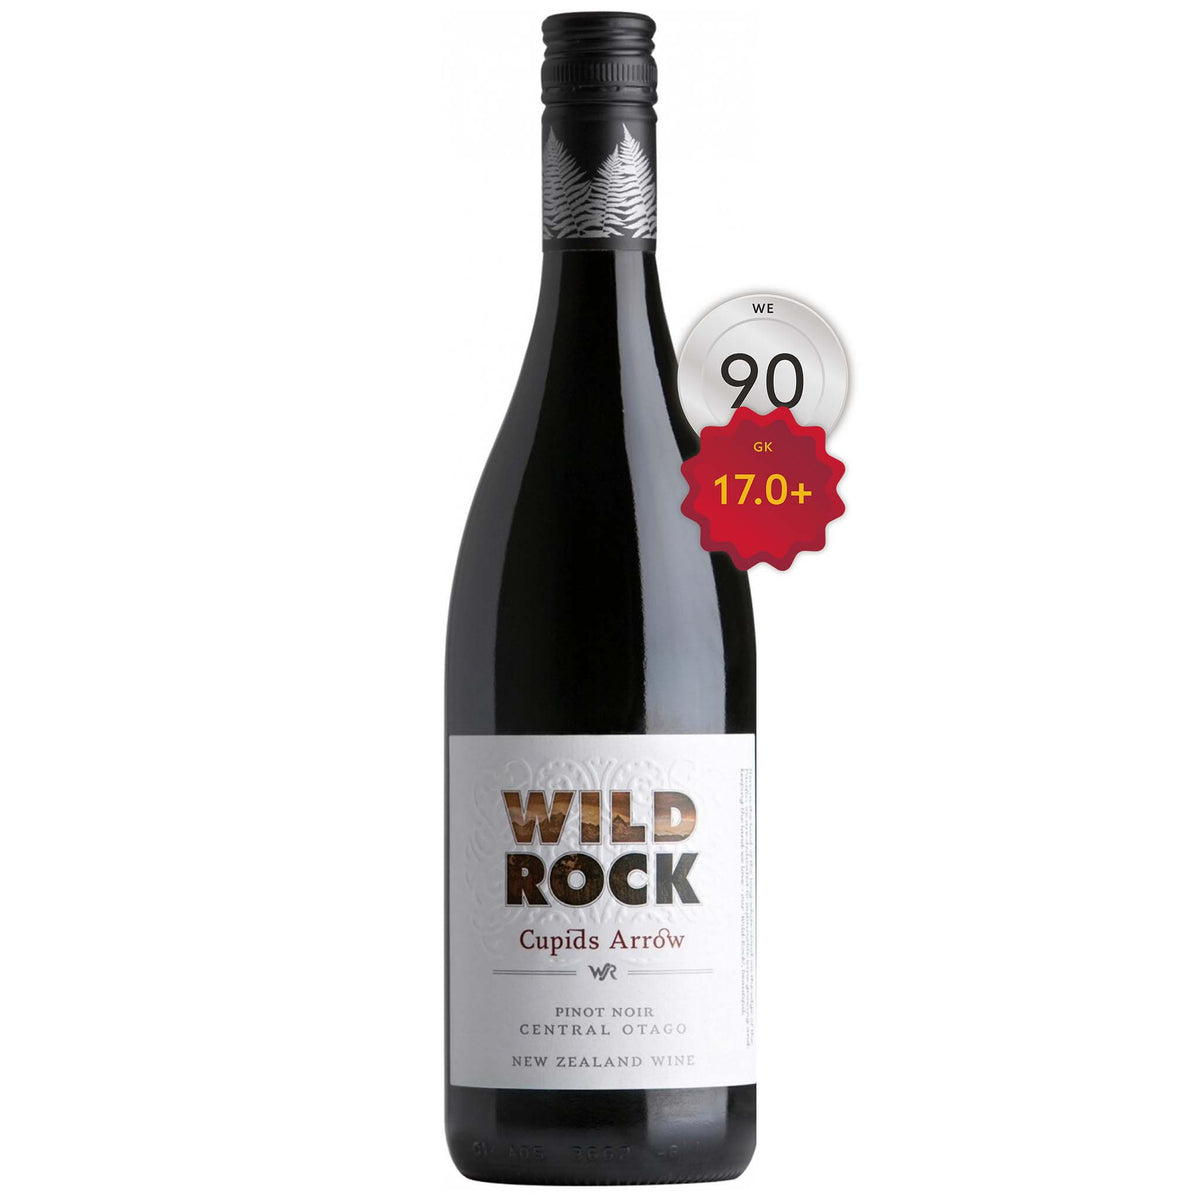 Wild Rock 'Cupids Arrow' Central Otago Pinot Noir 2007